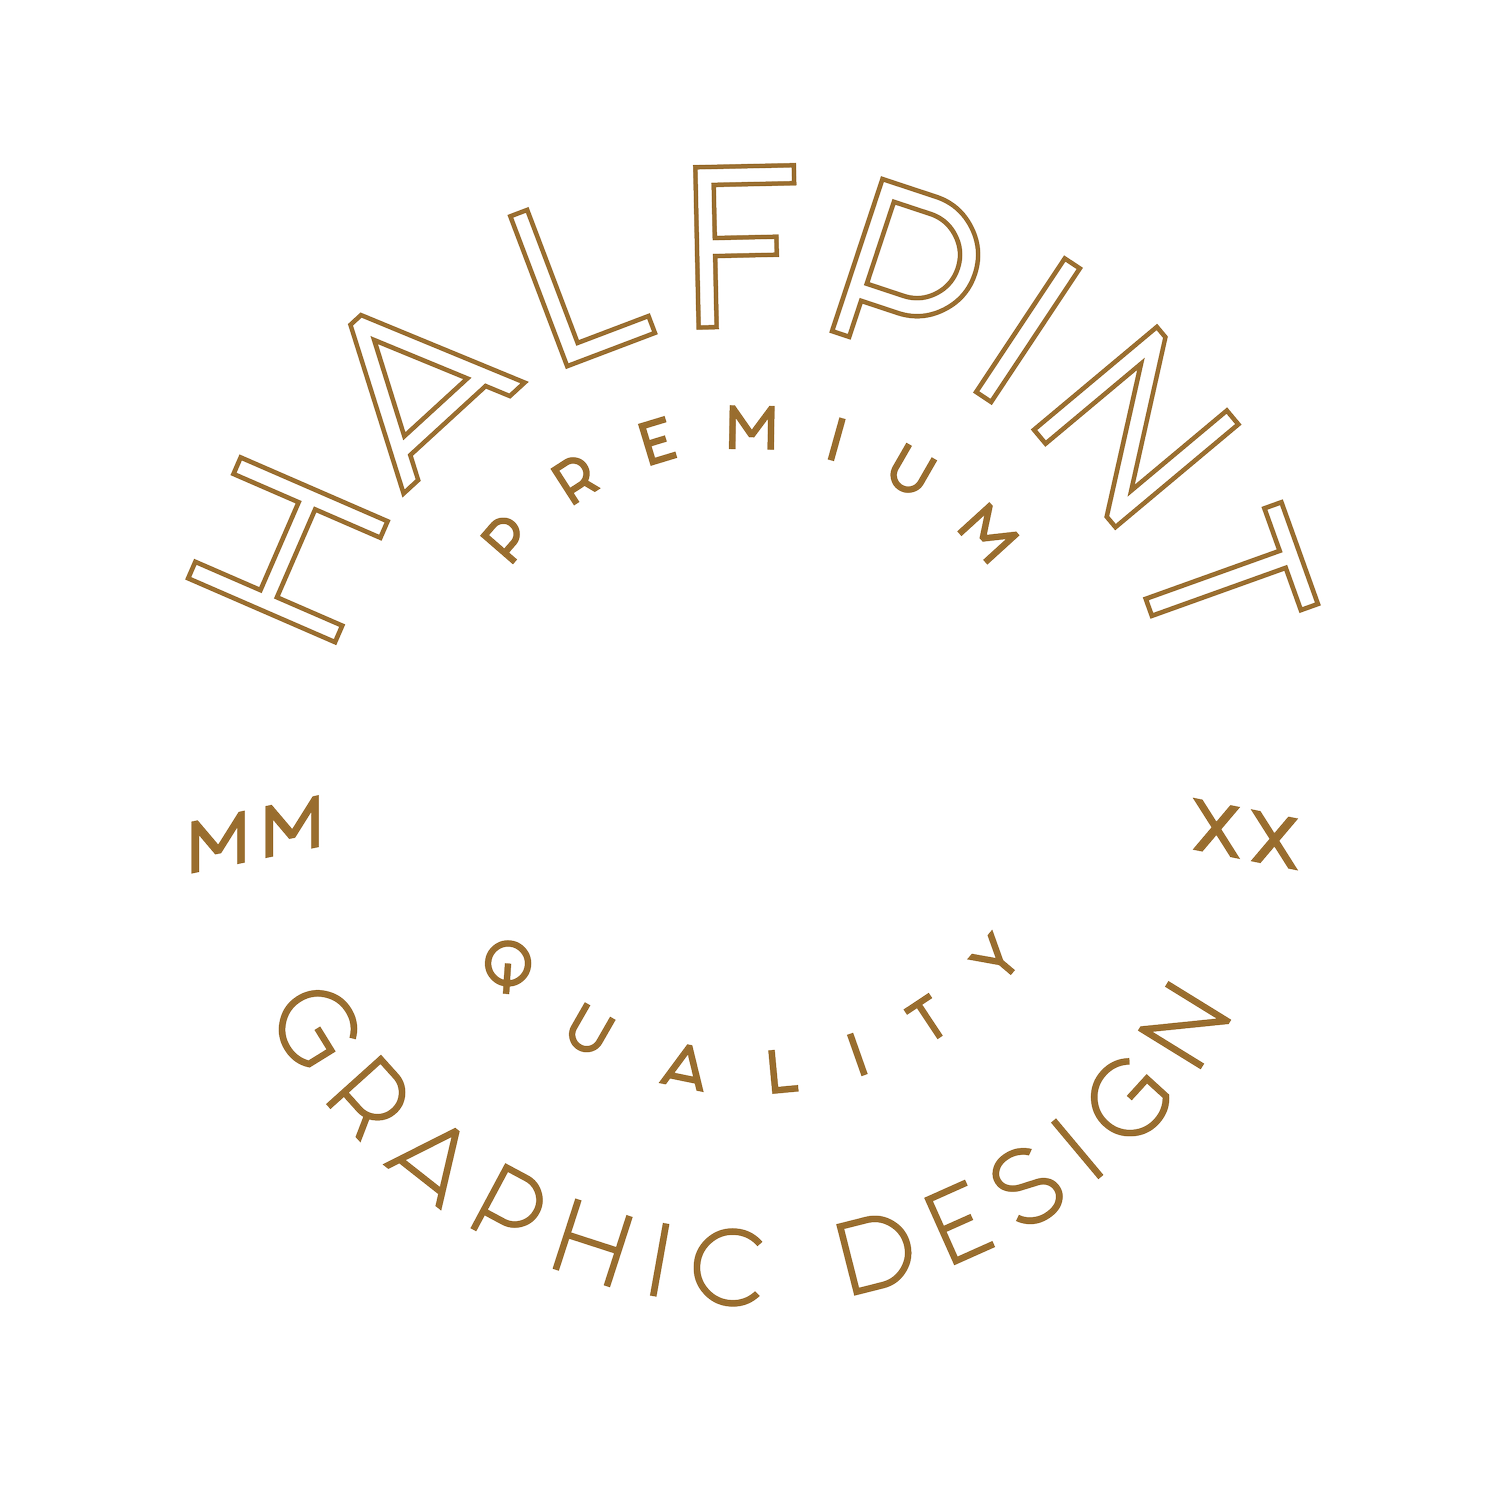 HalfPint Design